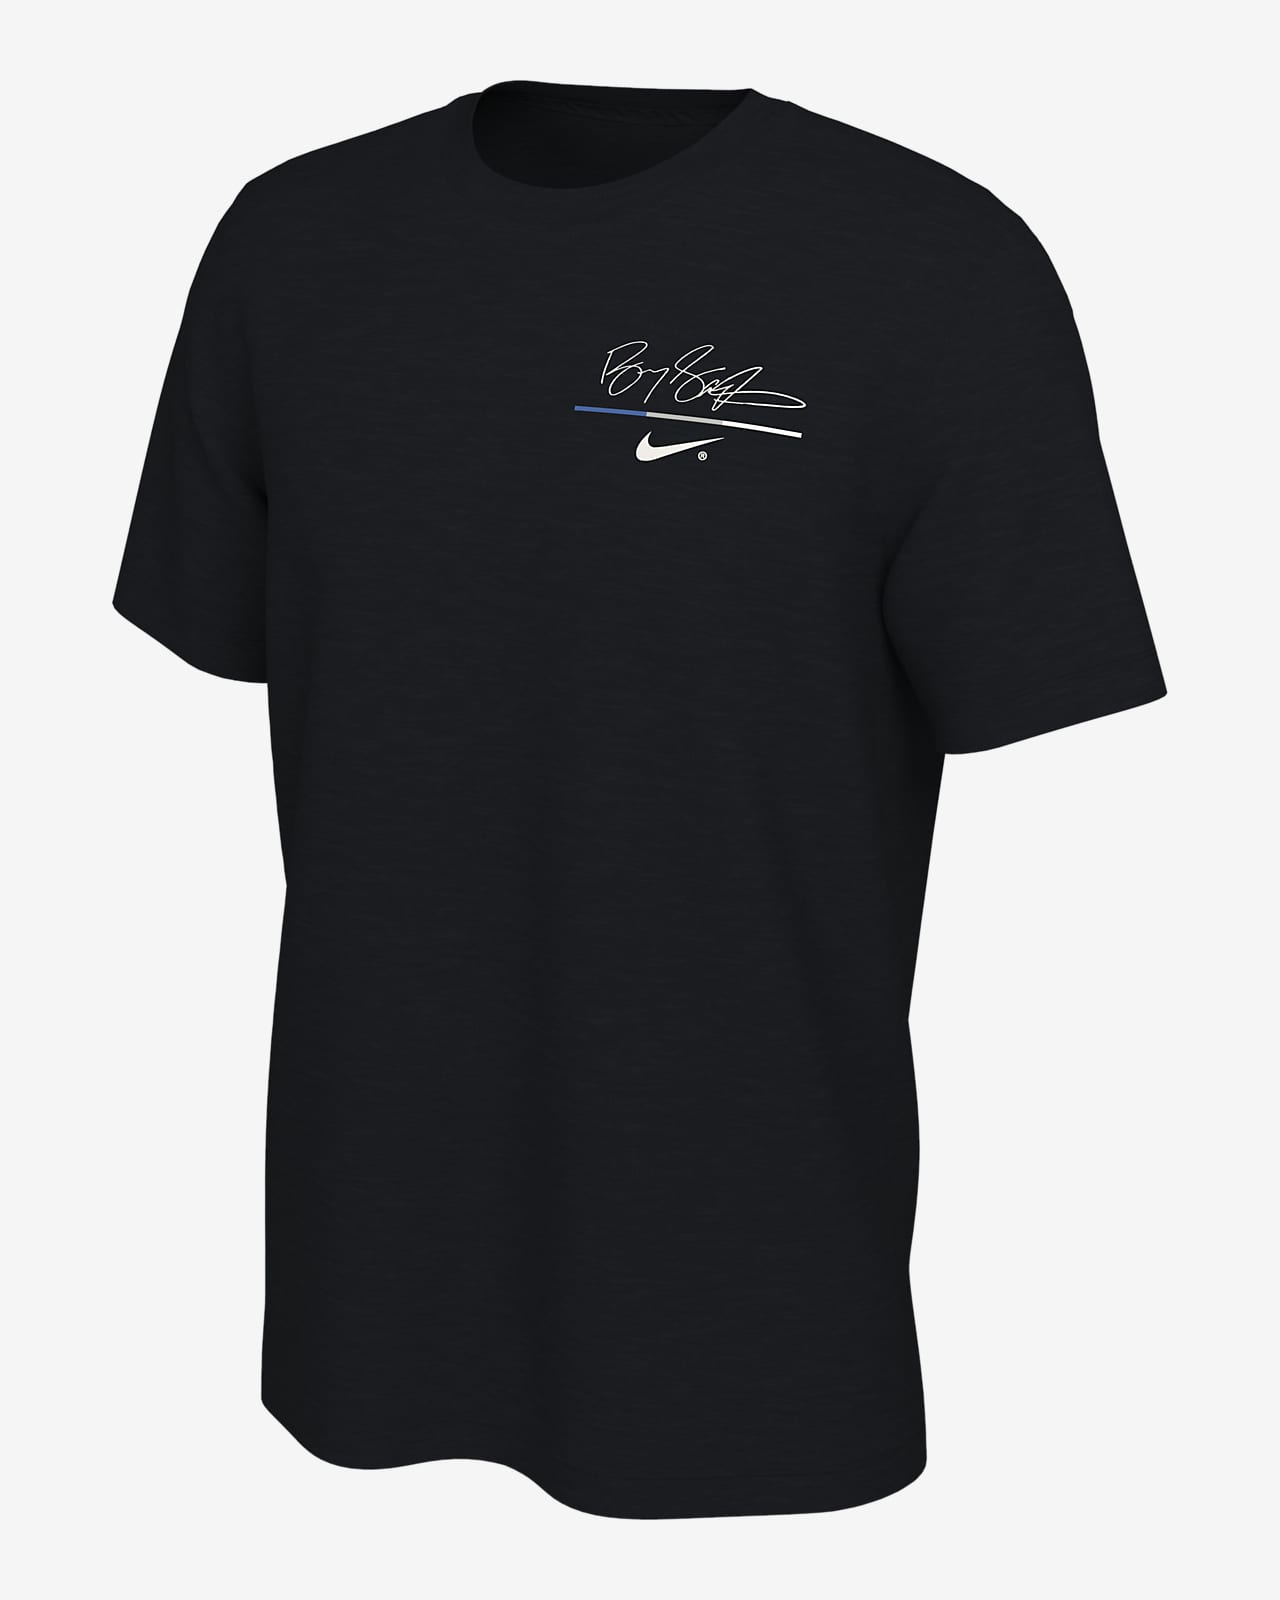 Barry Sanders Men's Nike T-Shirt